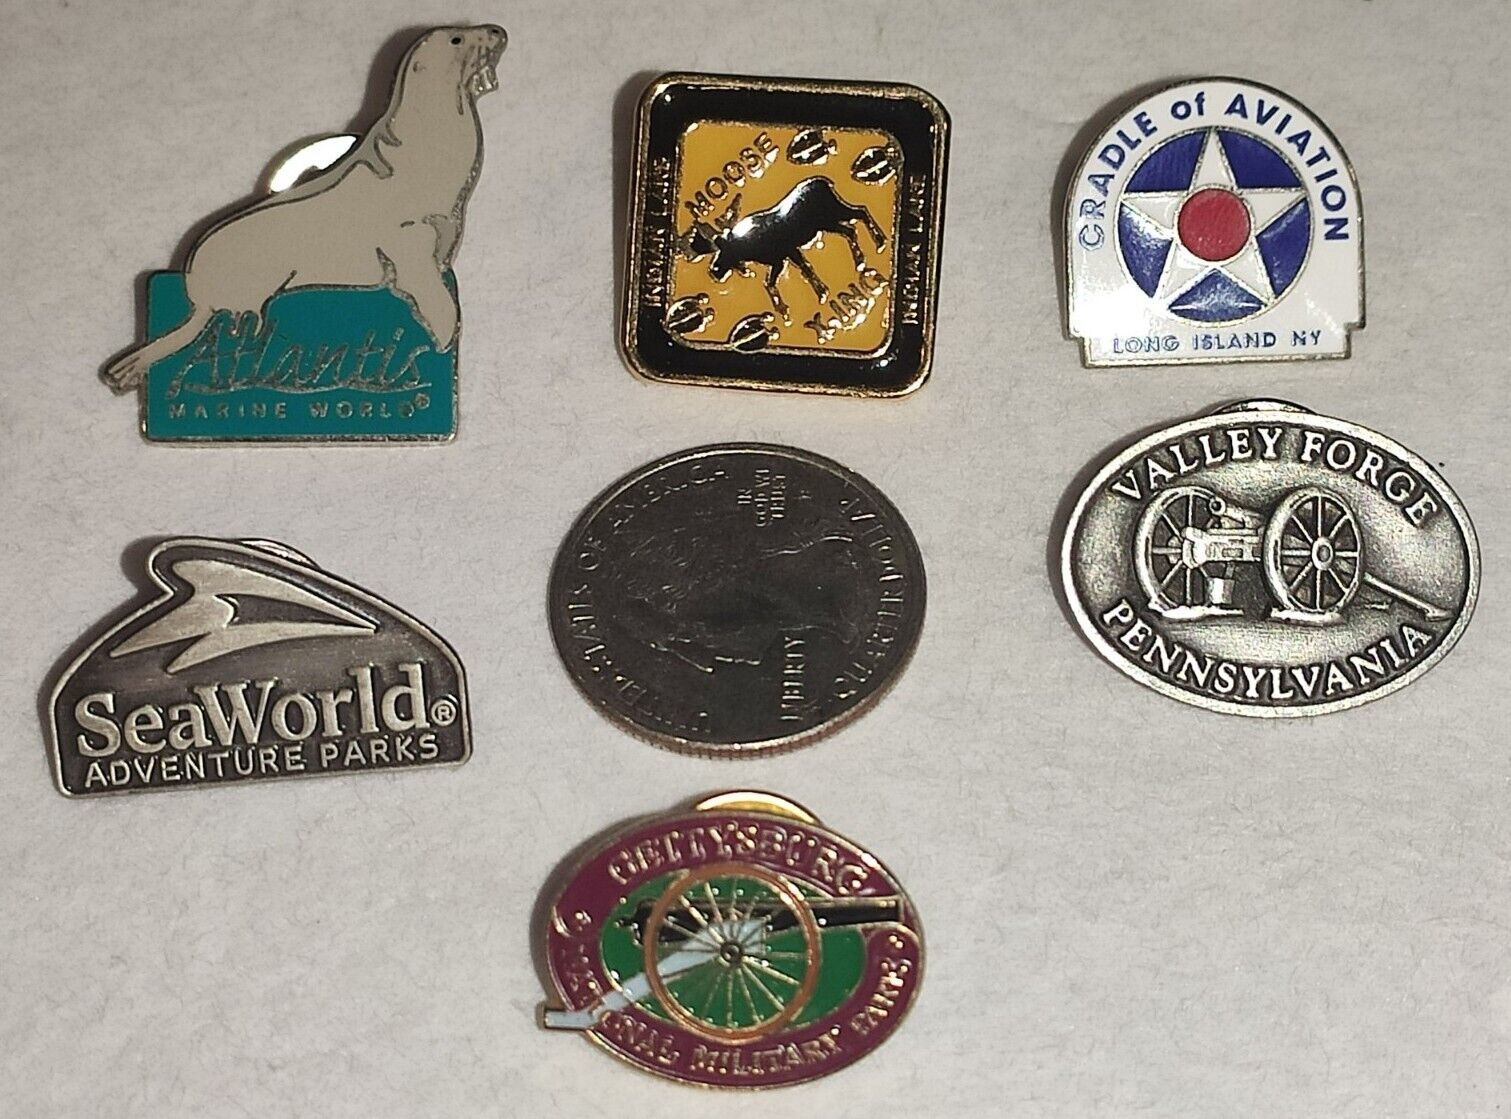 6 Travel Souvenir Pins- Gettysburg, Valley Forge, SeaWorld, Atlantis, New York